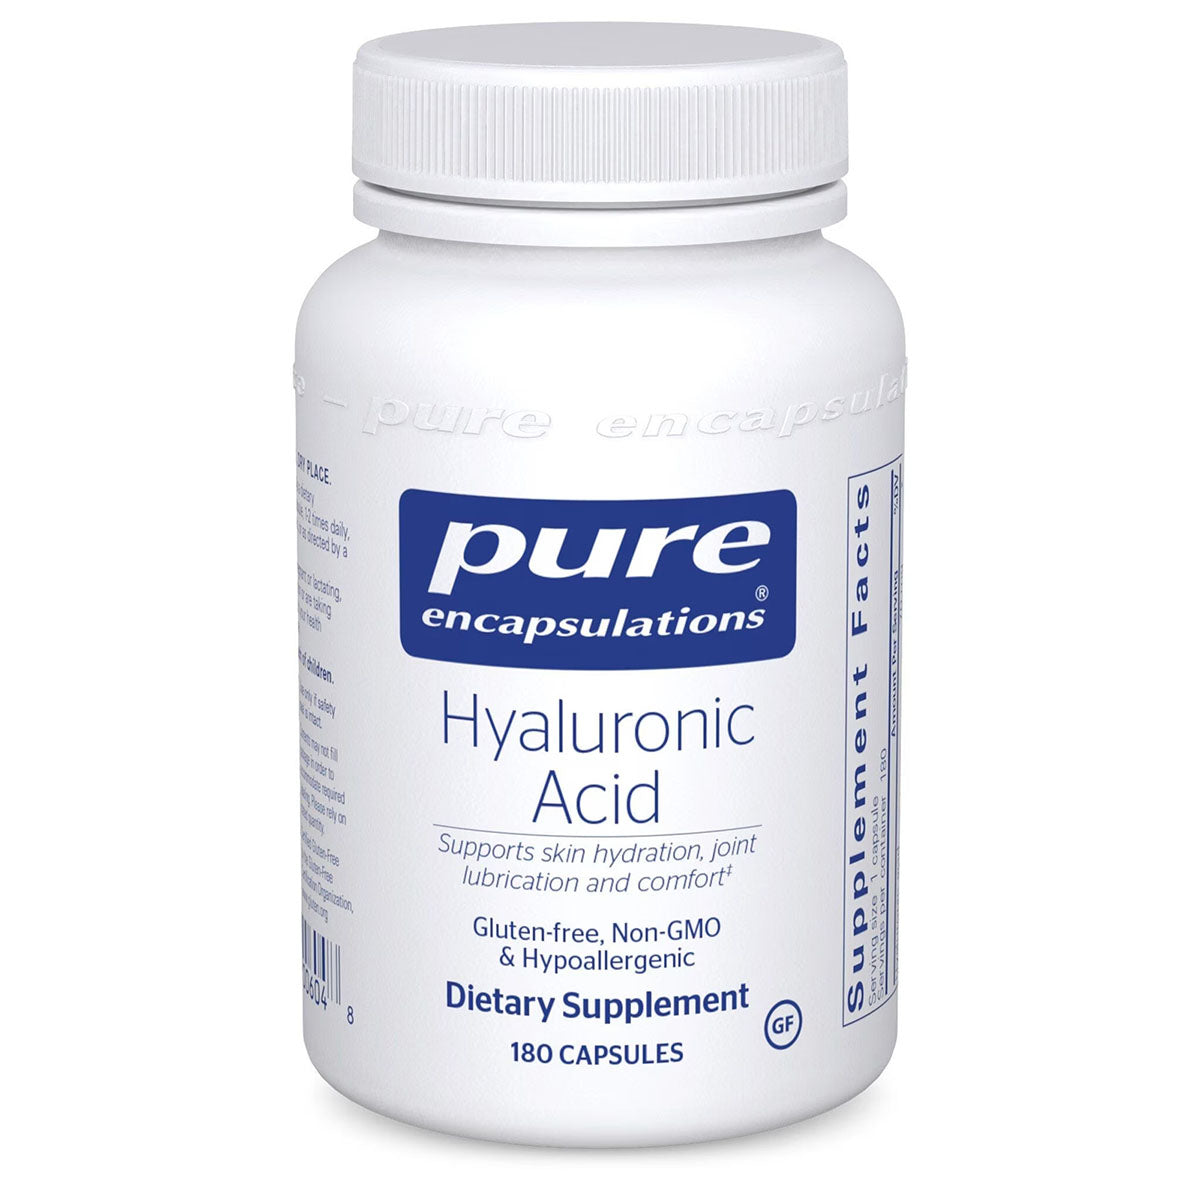 Hyaluronic Acid supplements